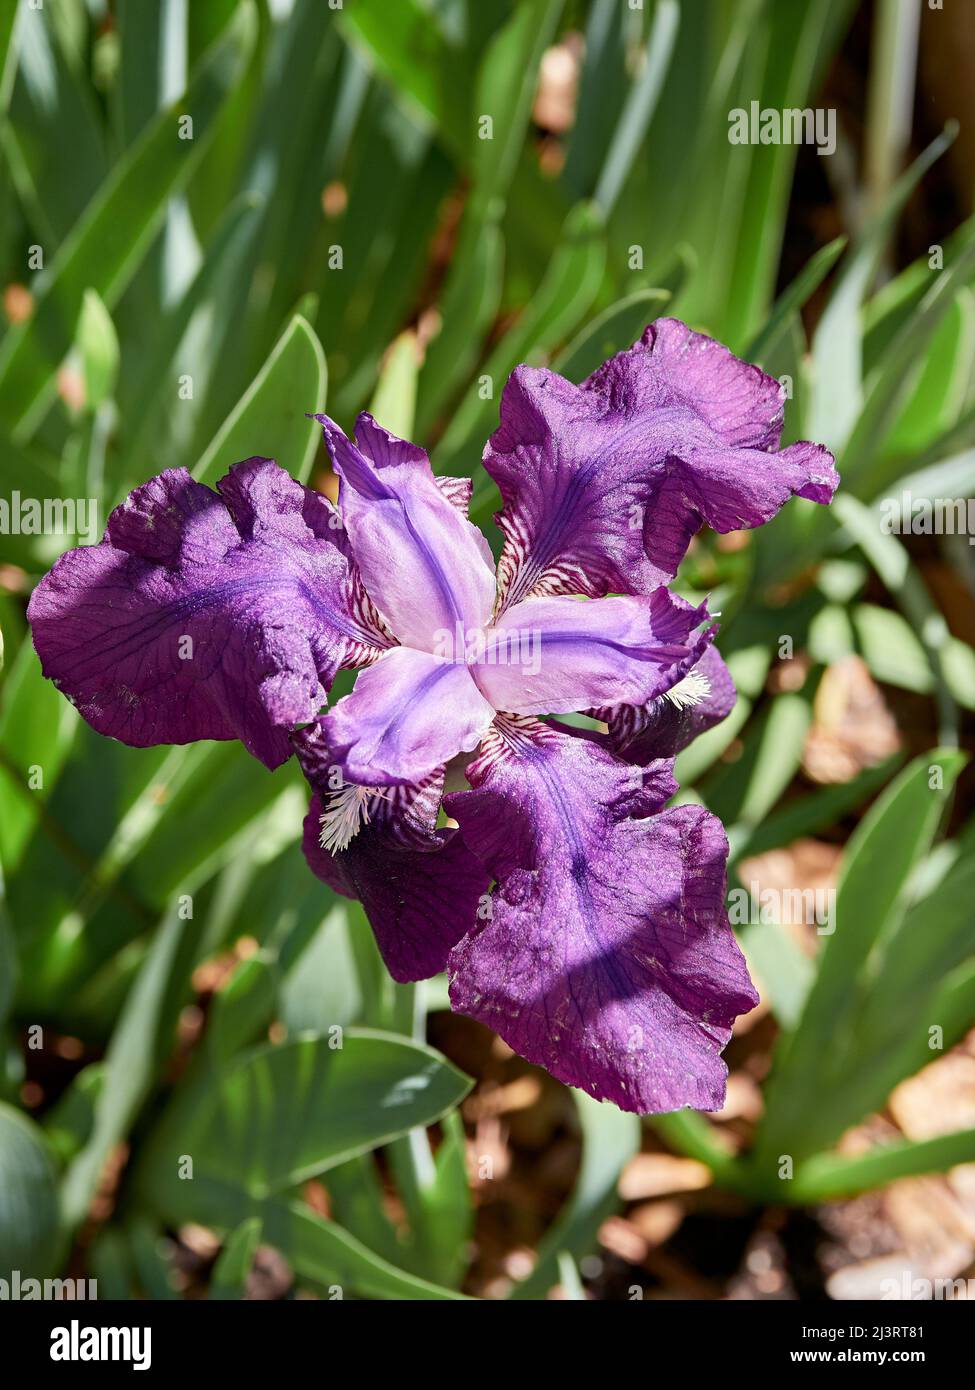 Flowering or blooming purple iris flower in a home garden. Stock Photo